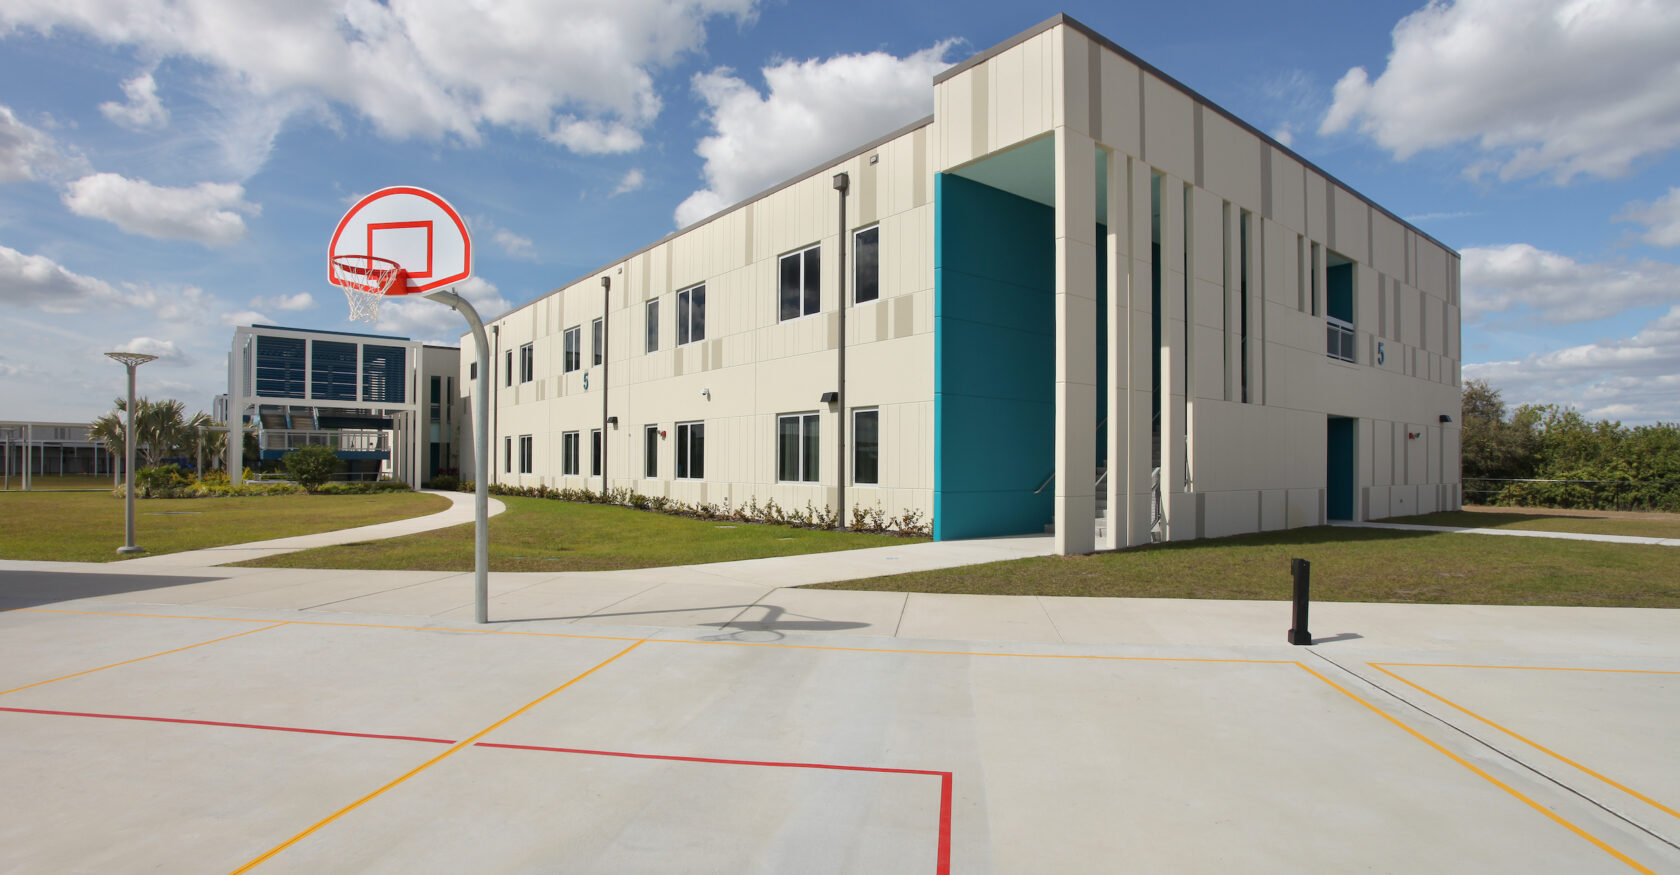 Exterior basketball courtyard shot of Belmont Elementary